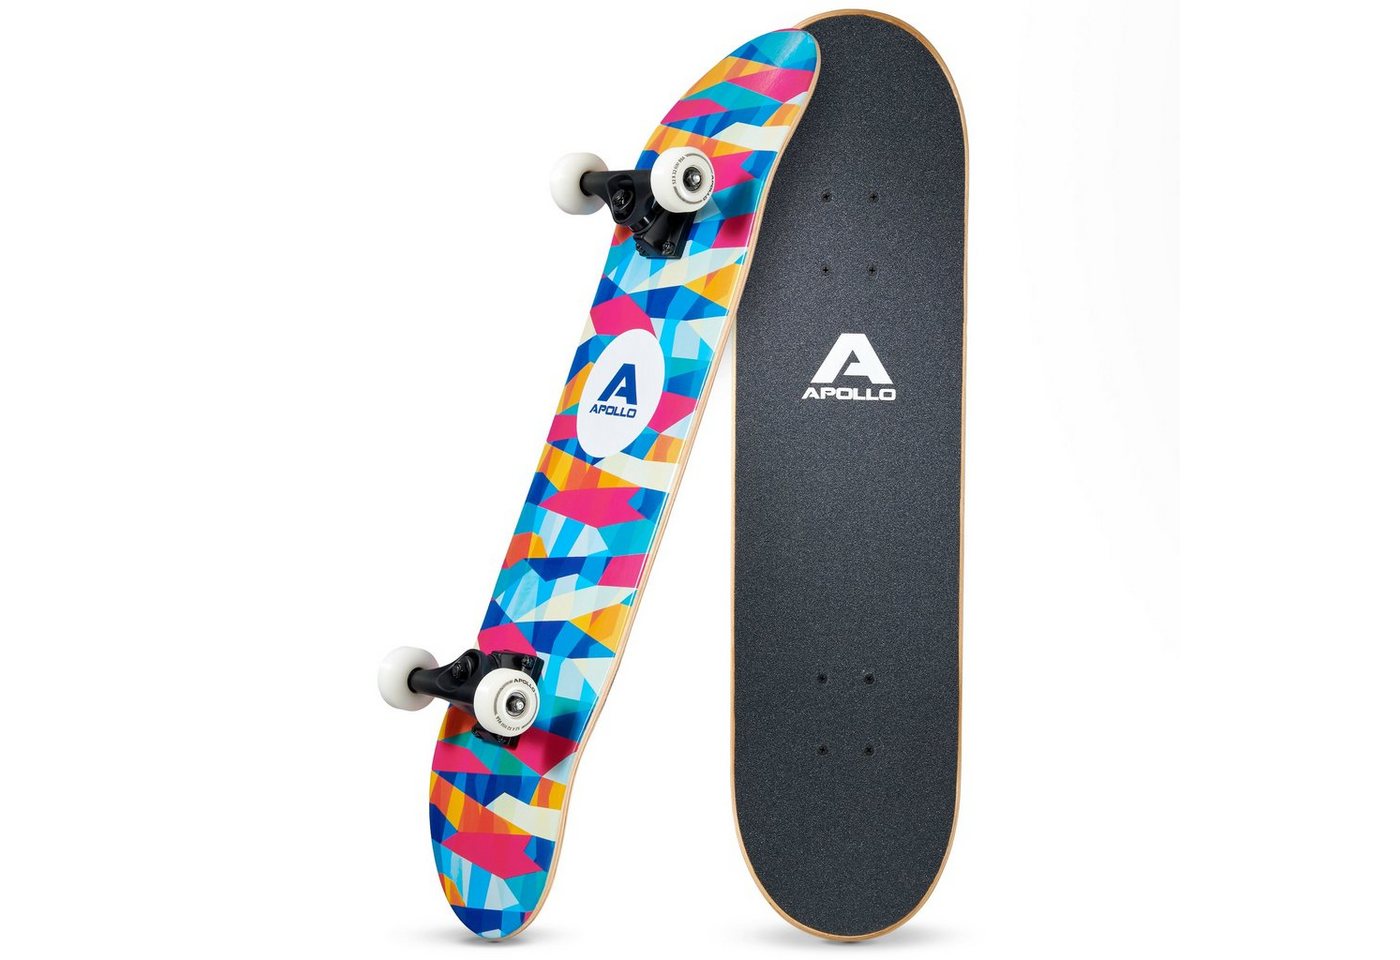 Apollo Skateboard Skateboard Kinder und Erwachsene Wood Board, Kinder Skateboard ab 6 Jahre von Apollo